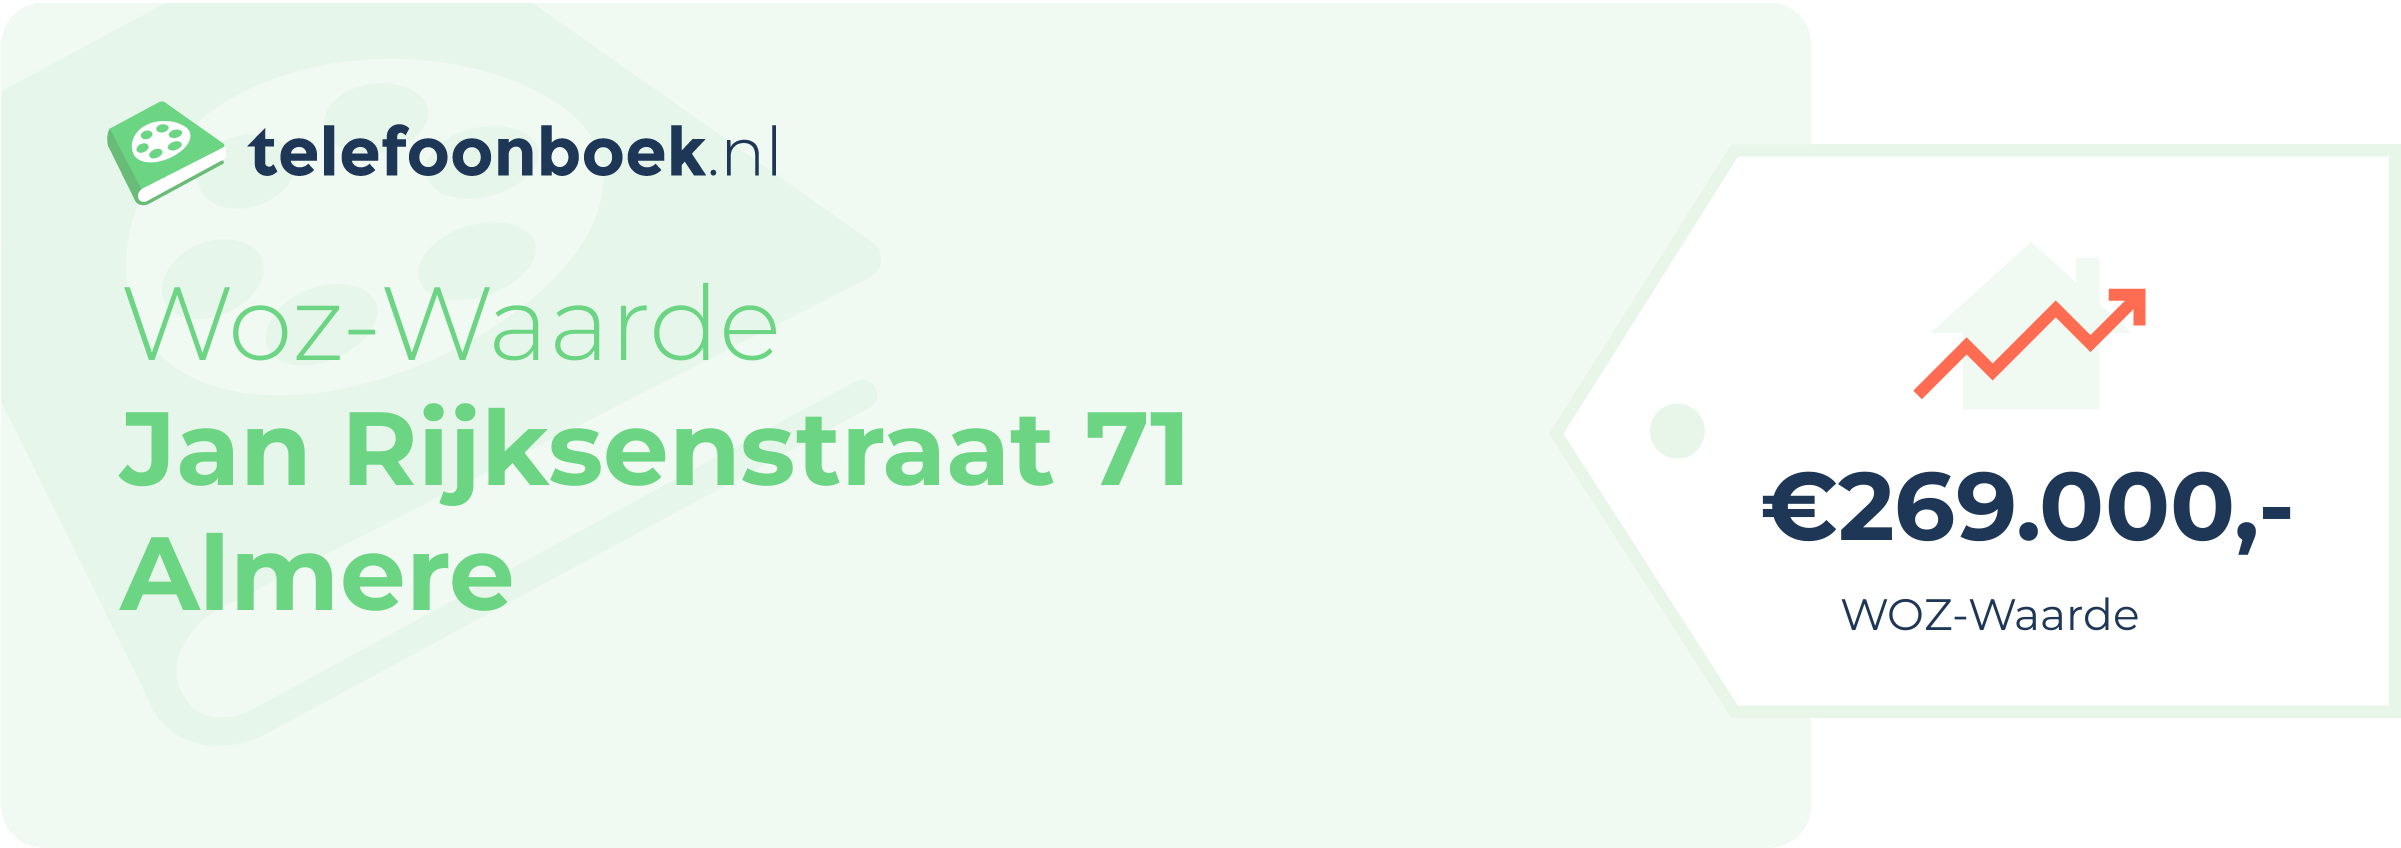 WOZ-waarde Jan Rijksenstraat 71 Almere